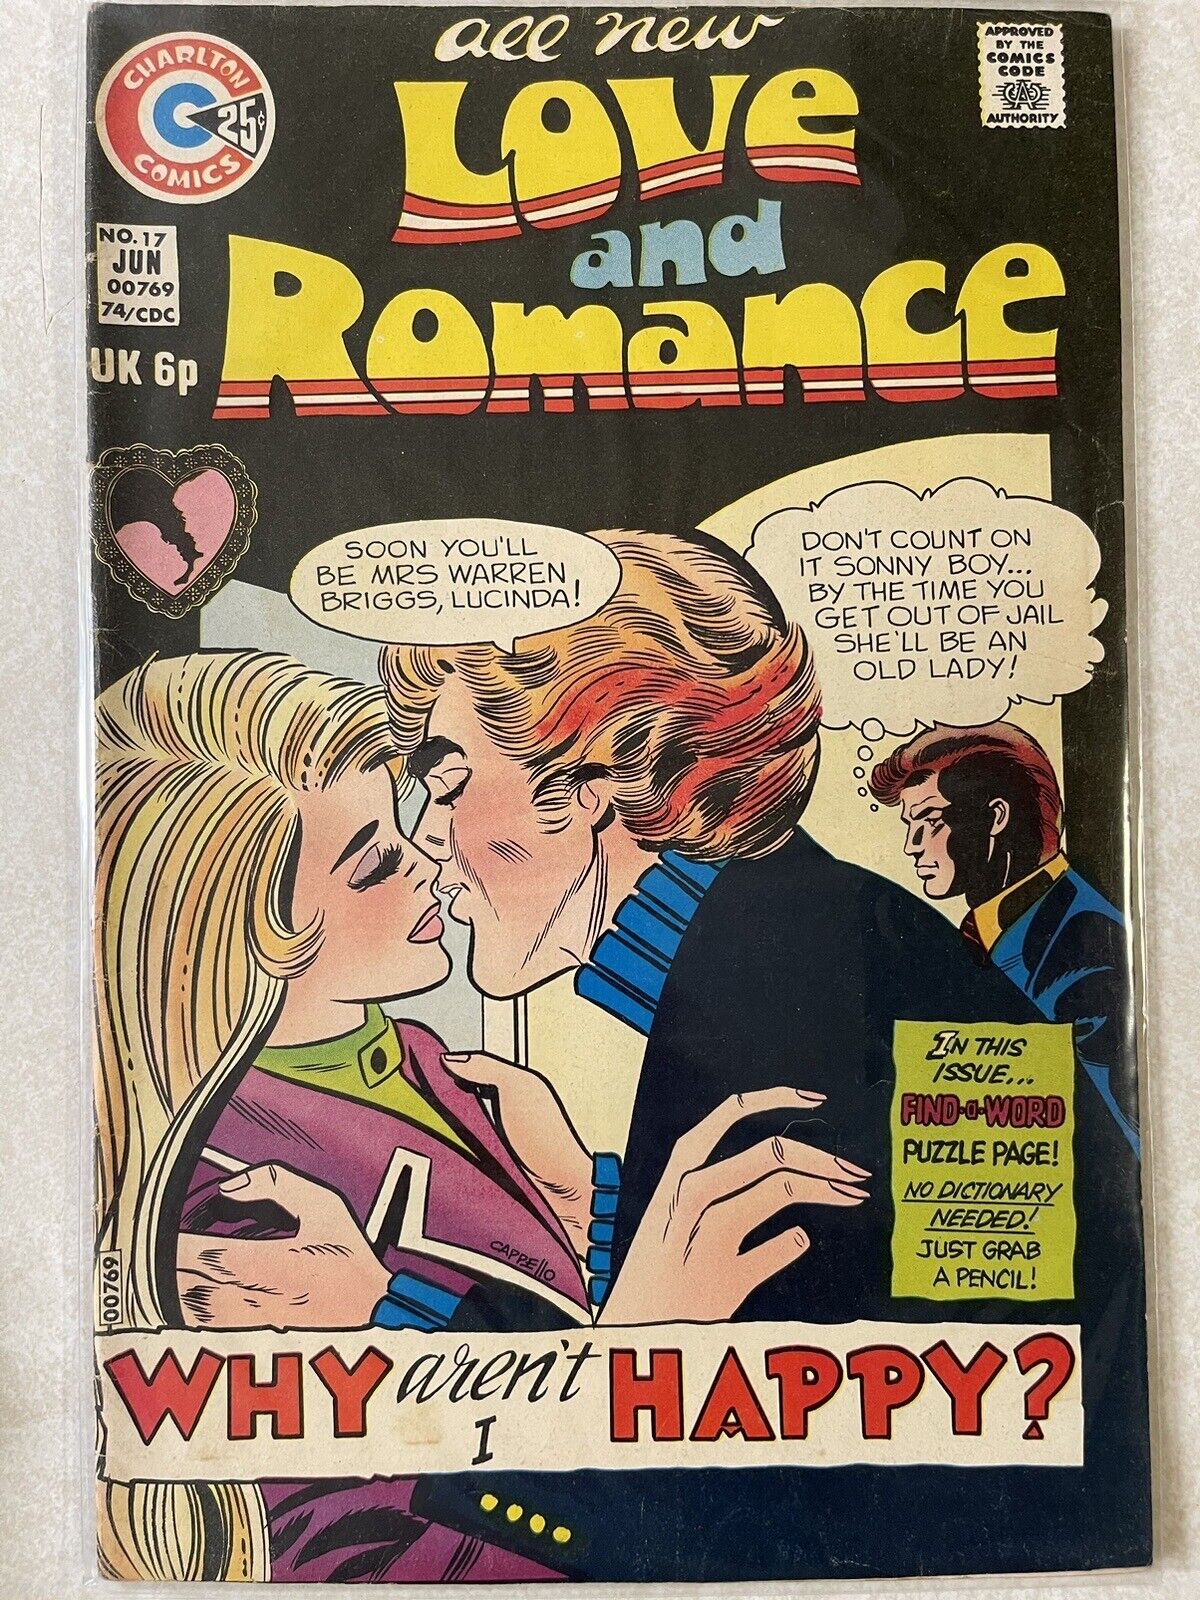 Love and Romance #17 June 1974, Charlton Comics